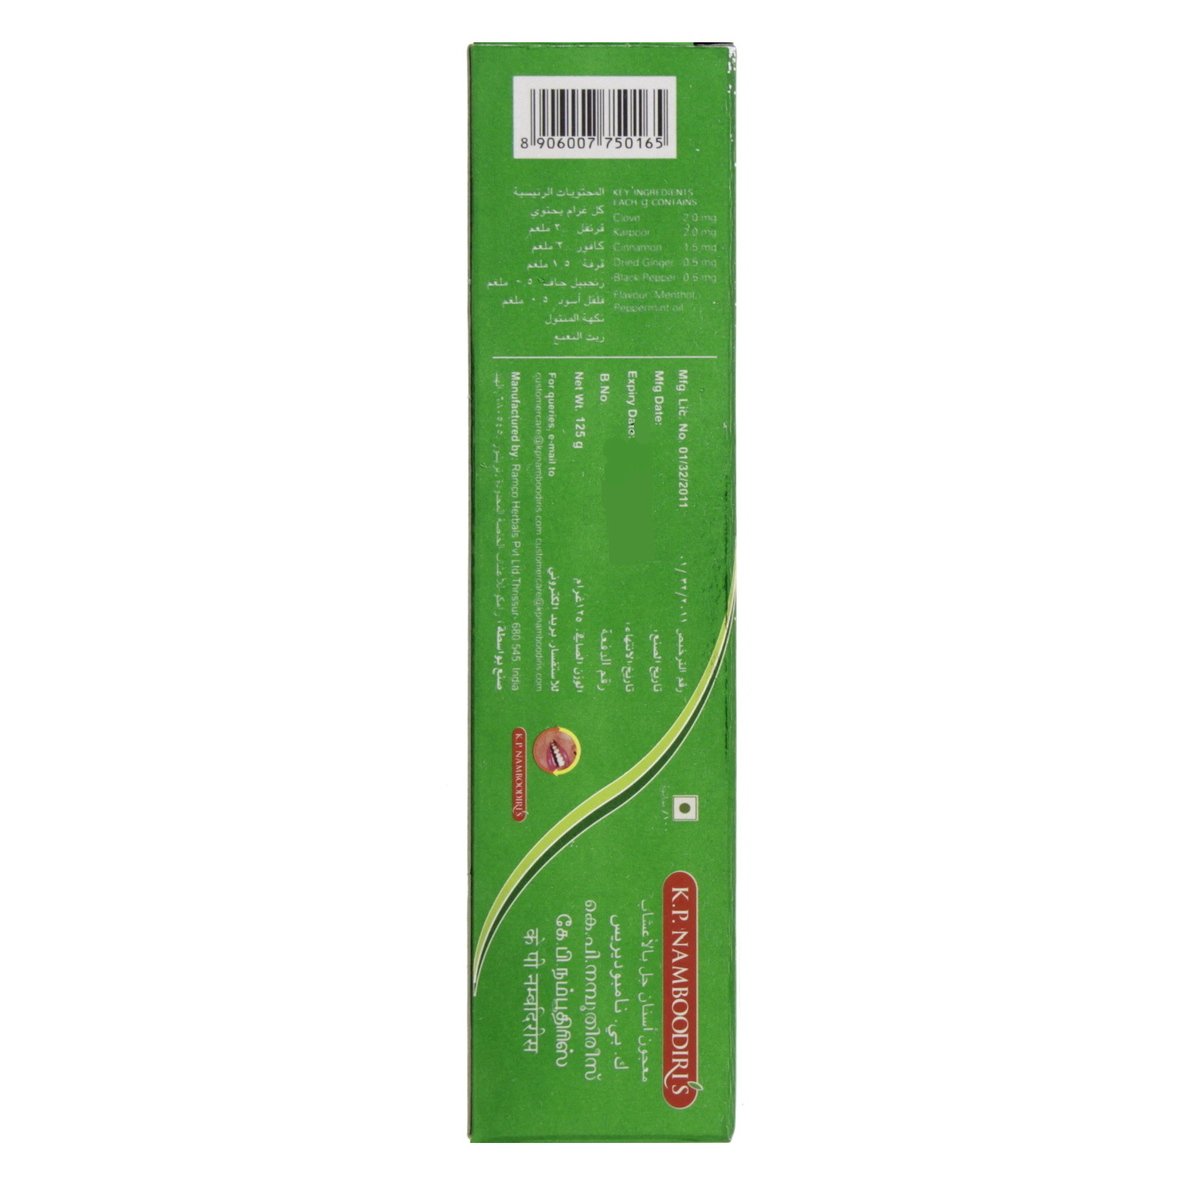 K.P. Namboodiri's Herbal Gel Toothpaste 125 g